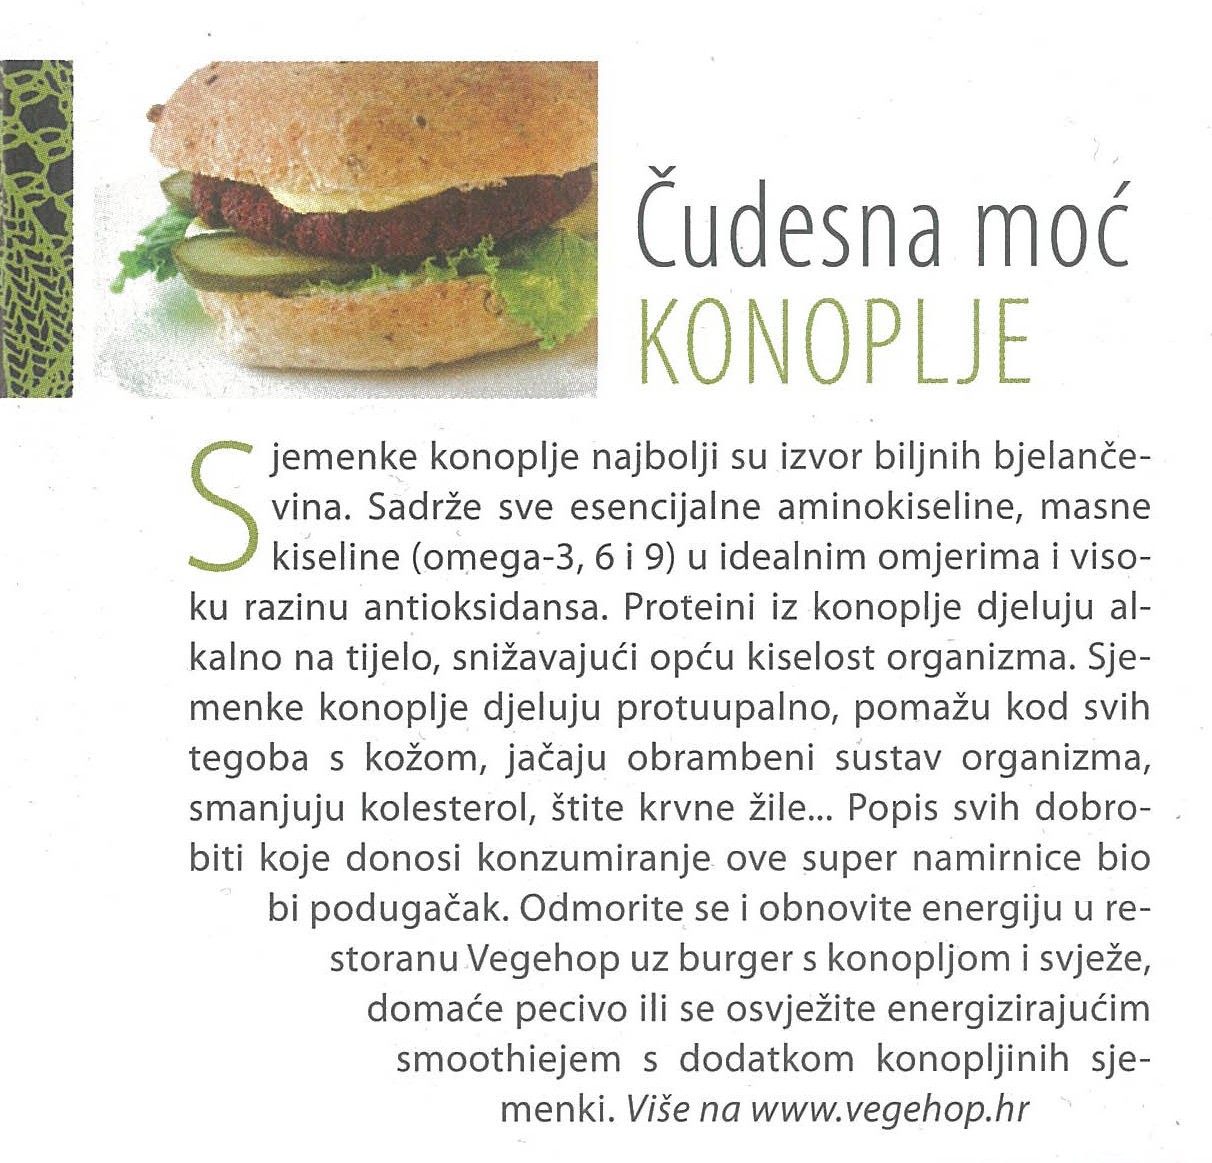 sensa-konoplje-vegehop-burger